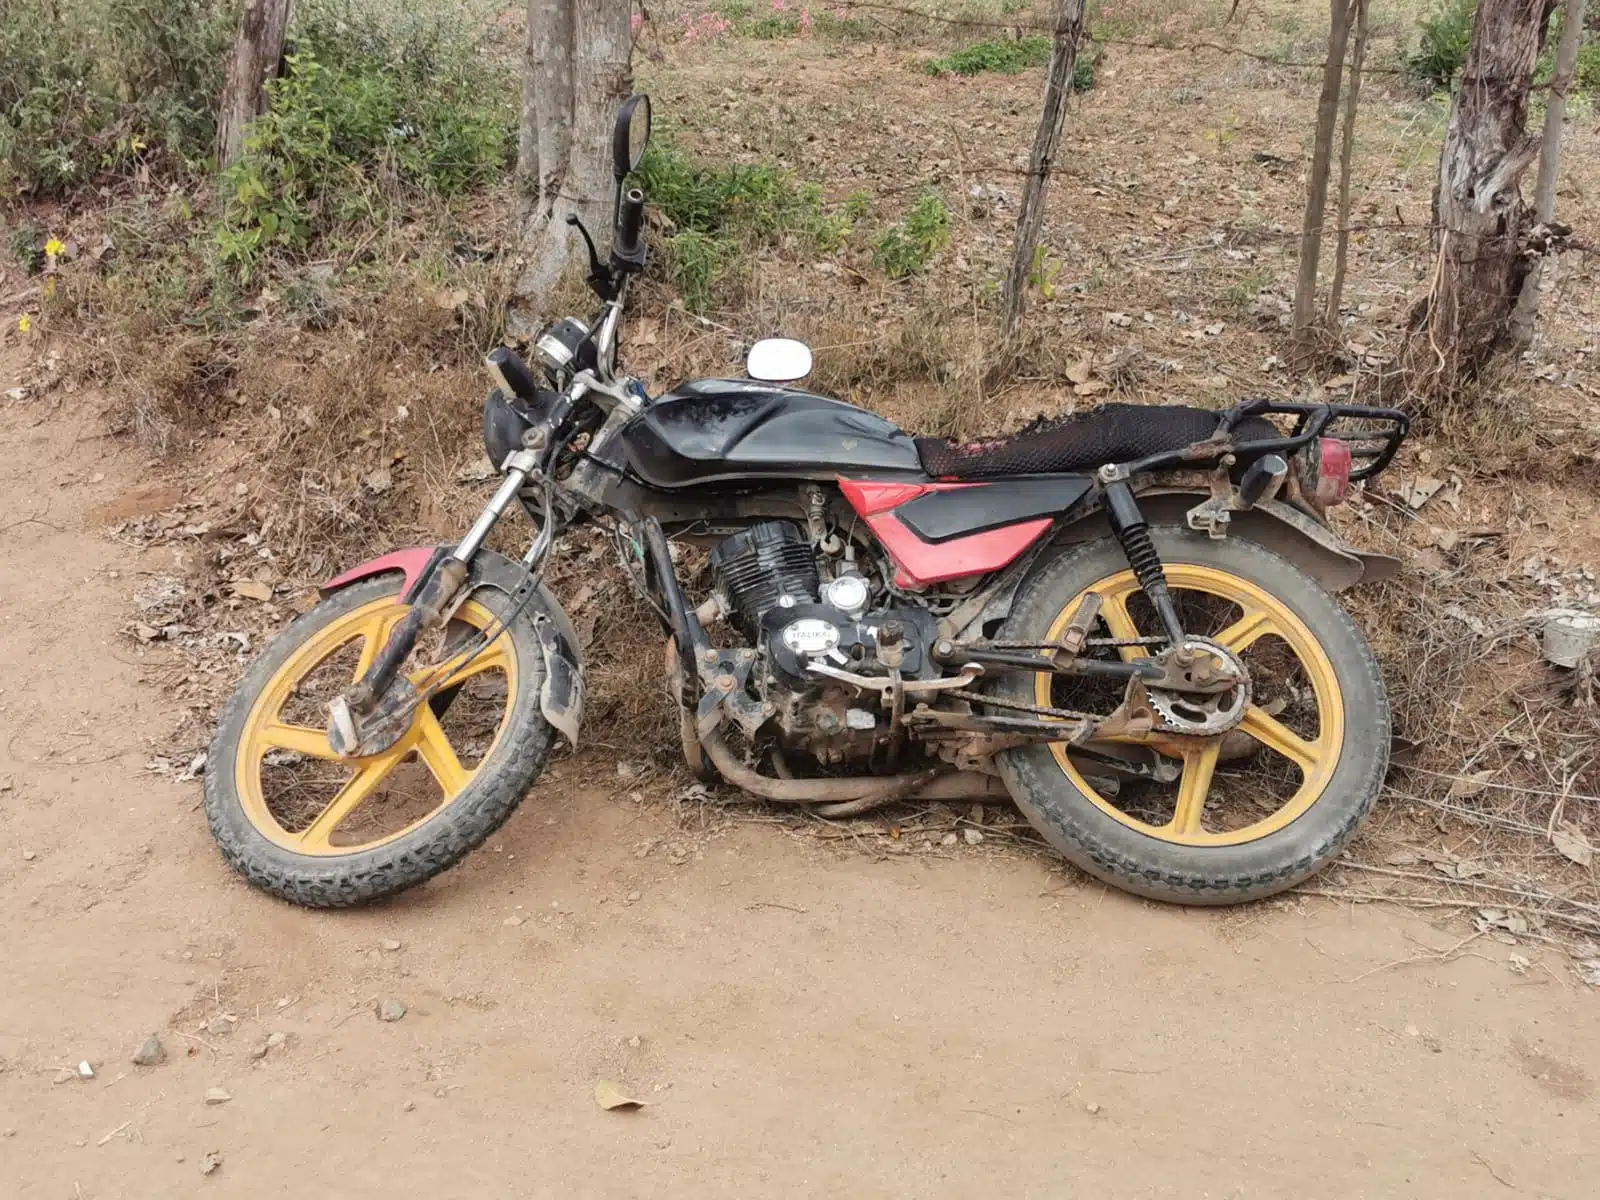 Motocicleta asegurada de la marca Italika con reporte de robo en Mazatlán